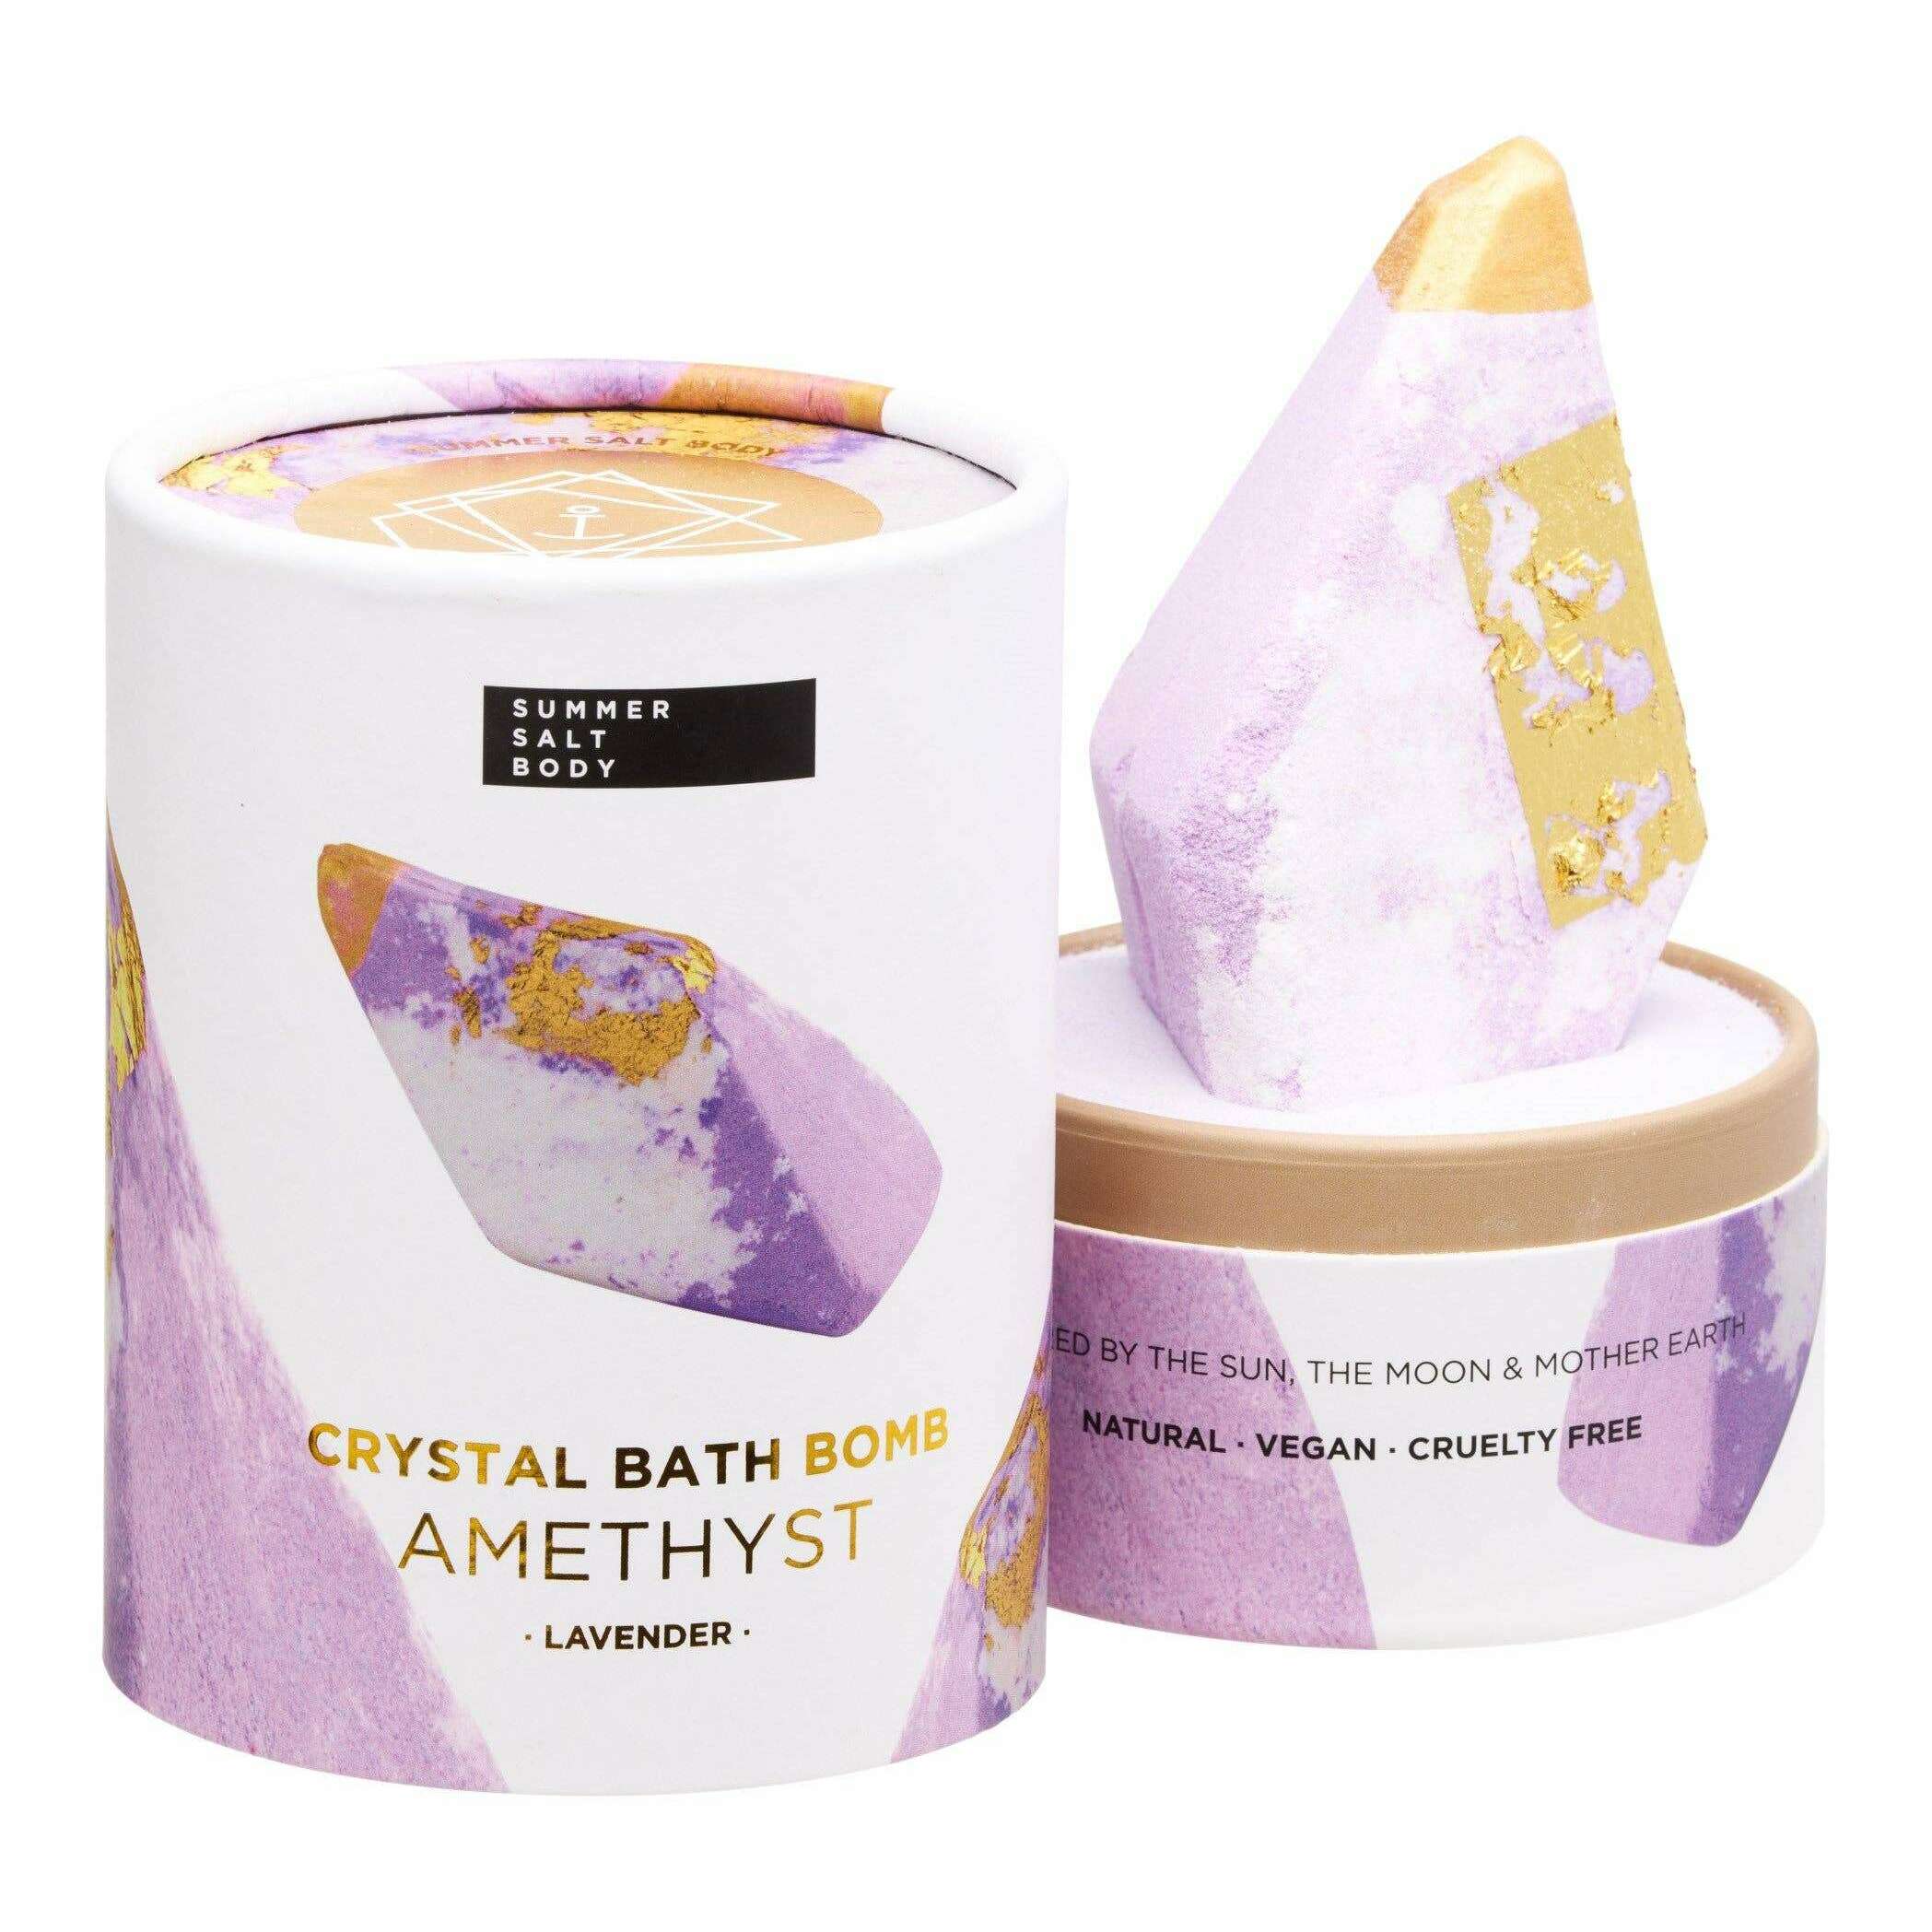 Impodimo Living & Giving:Crystal Bath Bomb - Amethyst - Lavender:Summer Salt Body